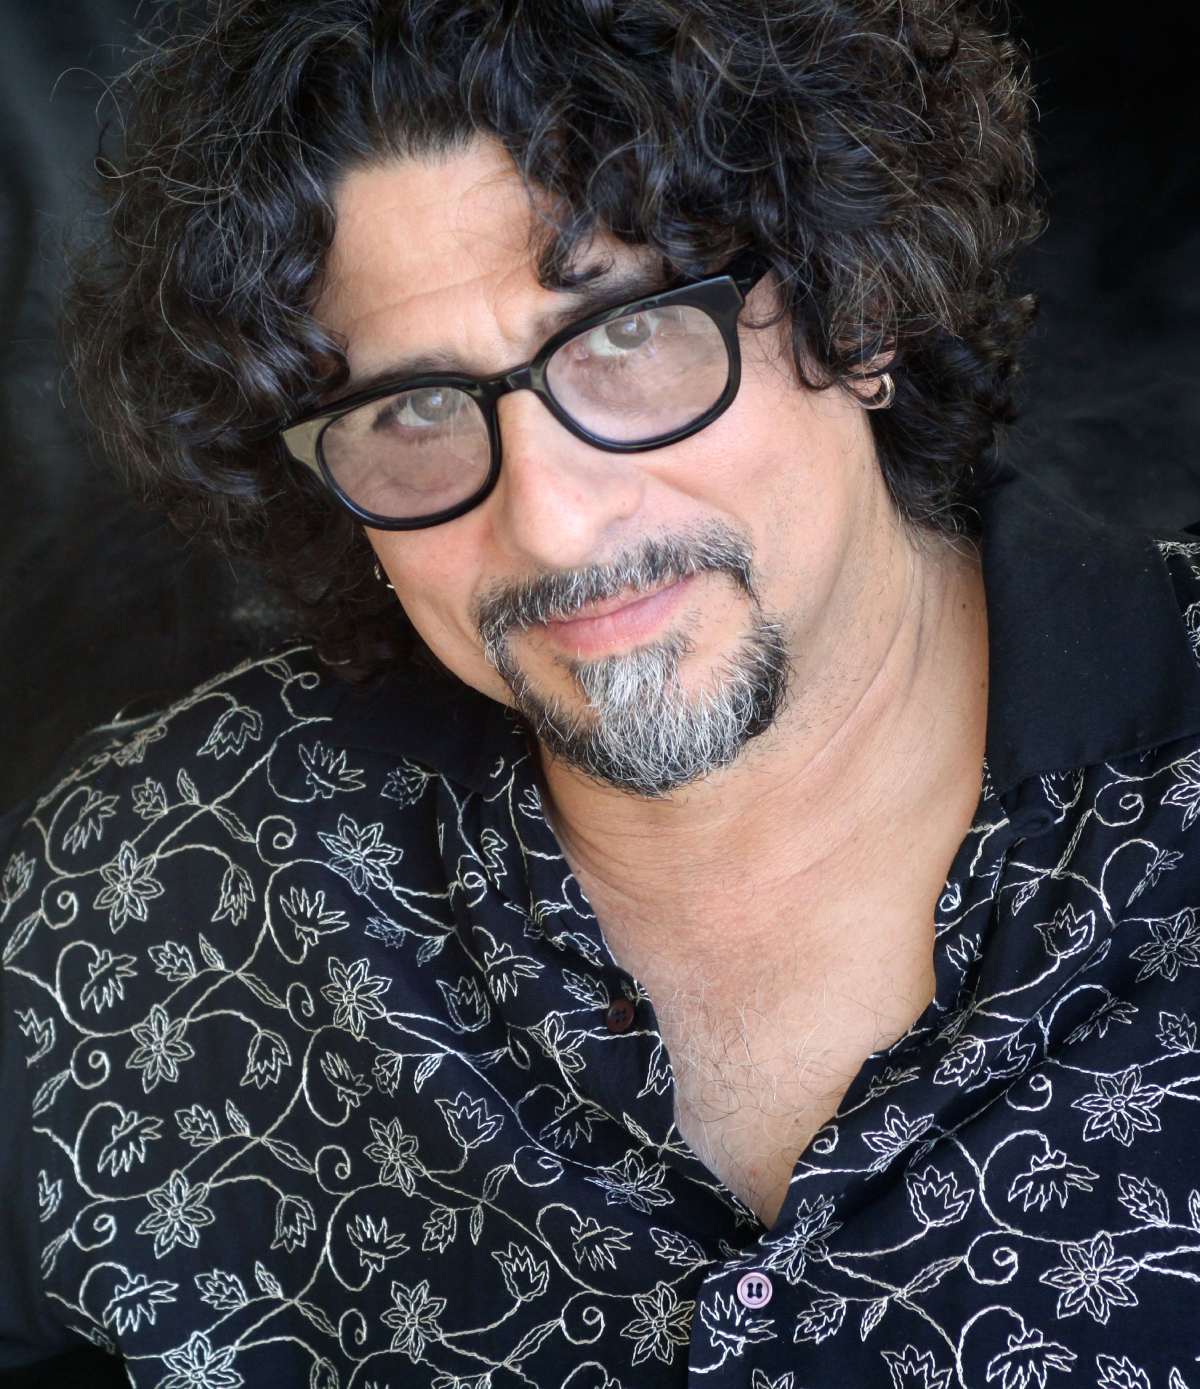 Dan Navarro est l'un des auteurs de "We Belong".